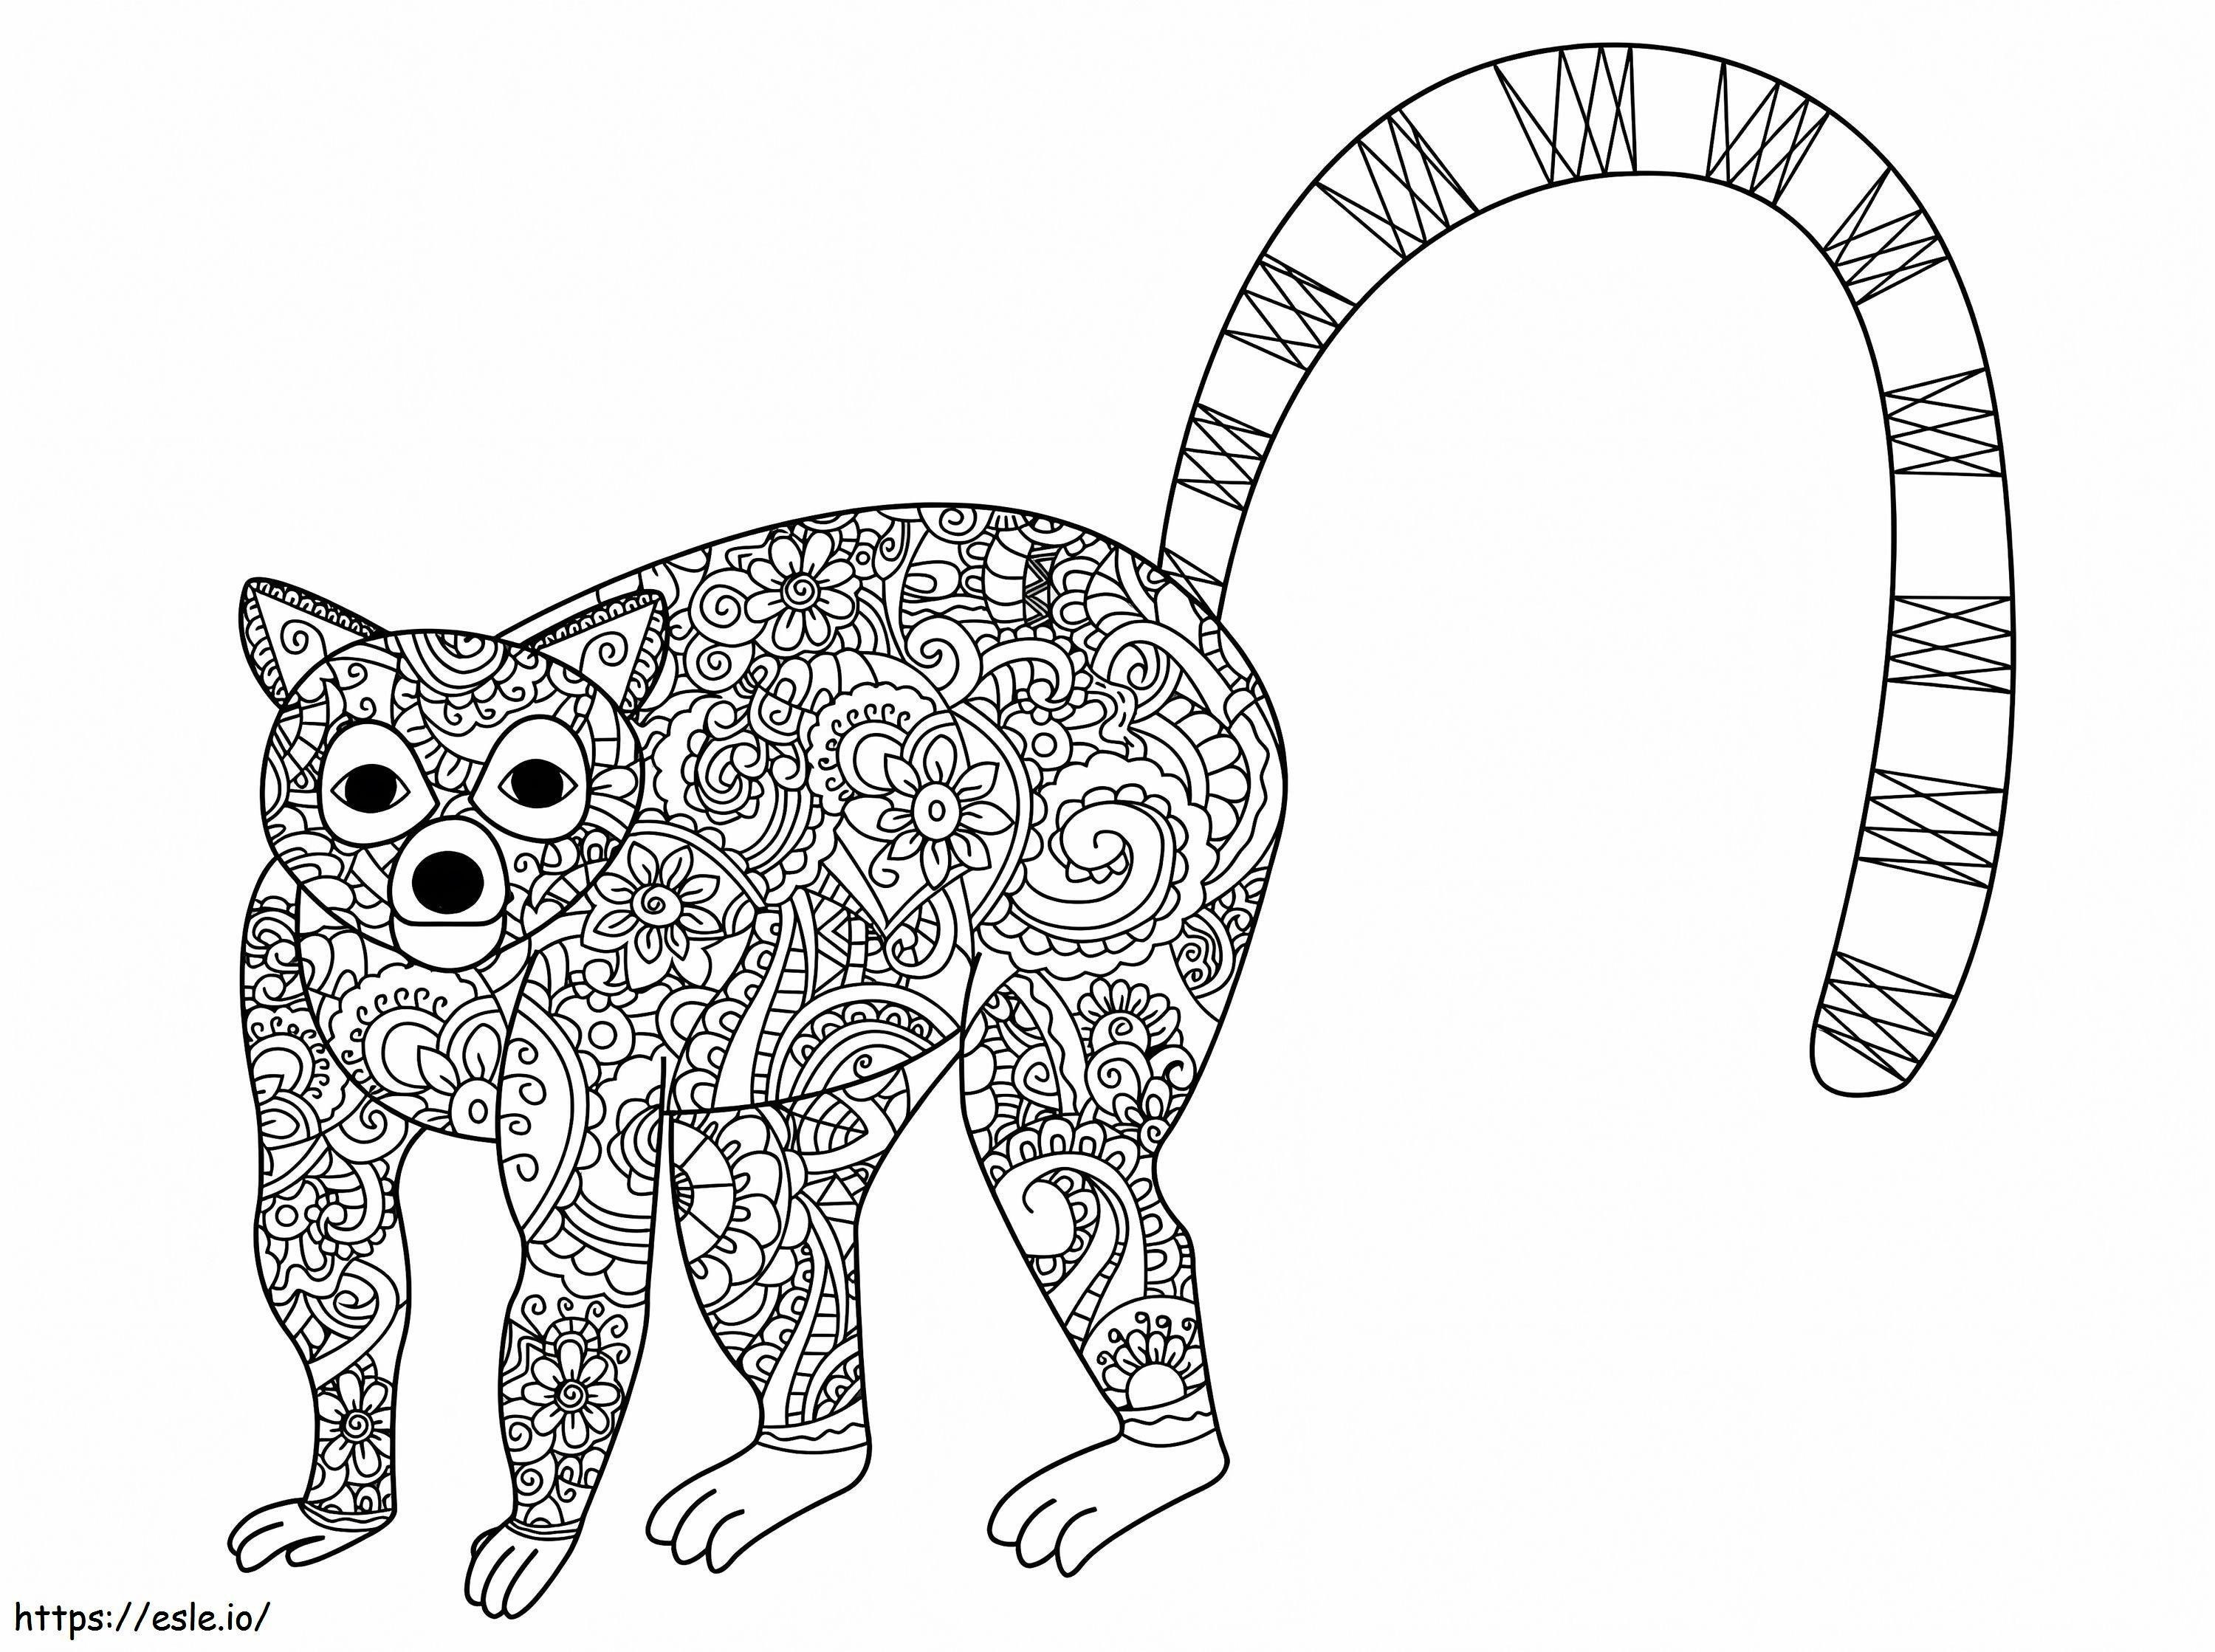 Lemuren-Mandala ausmalbilder